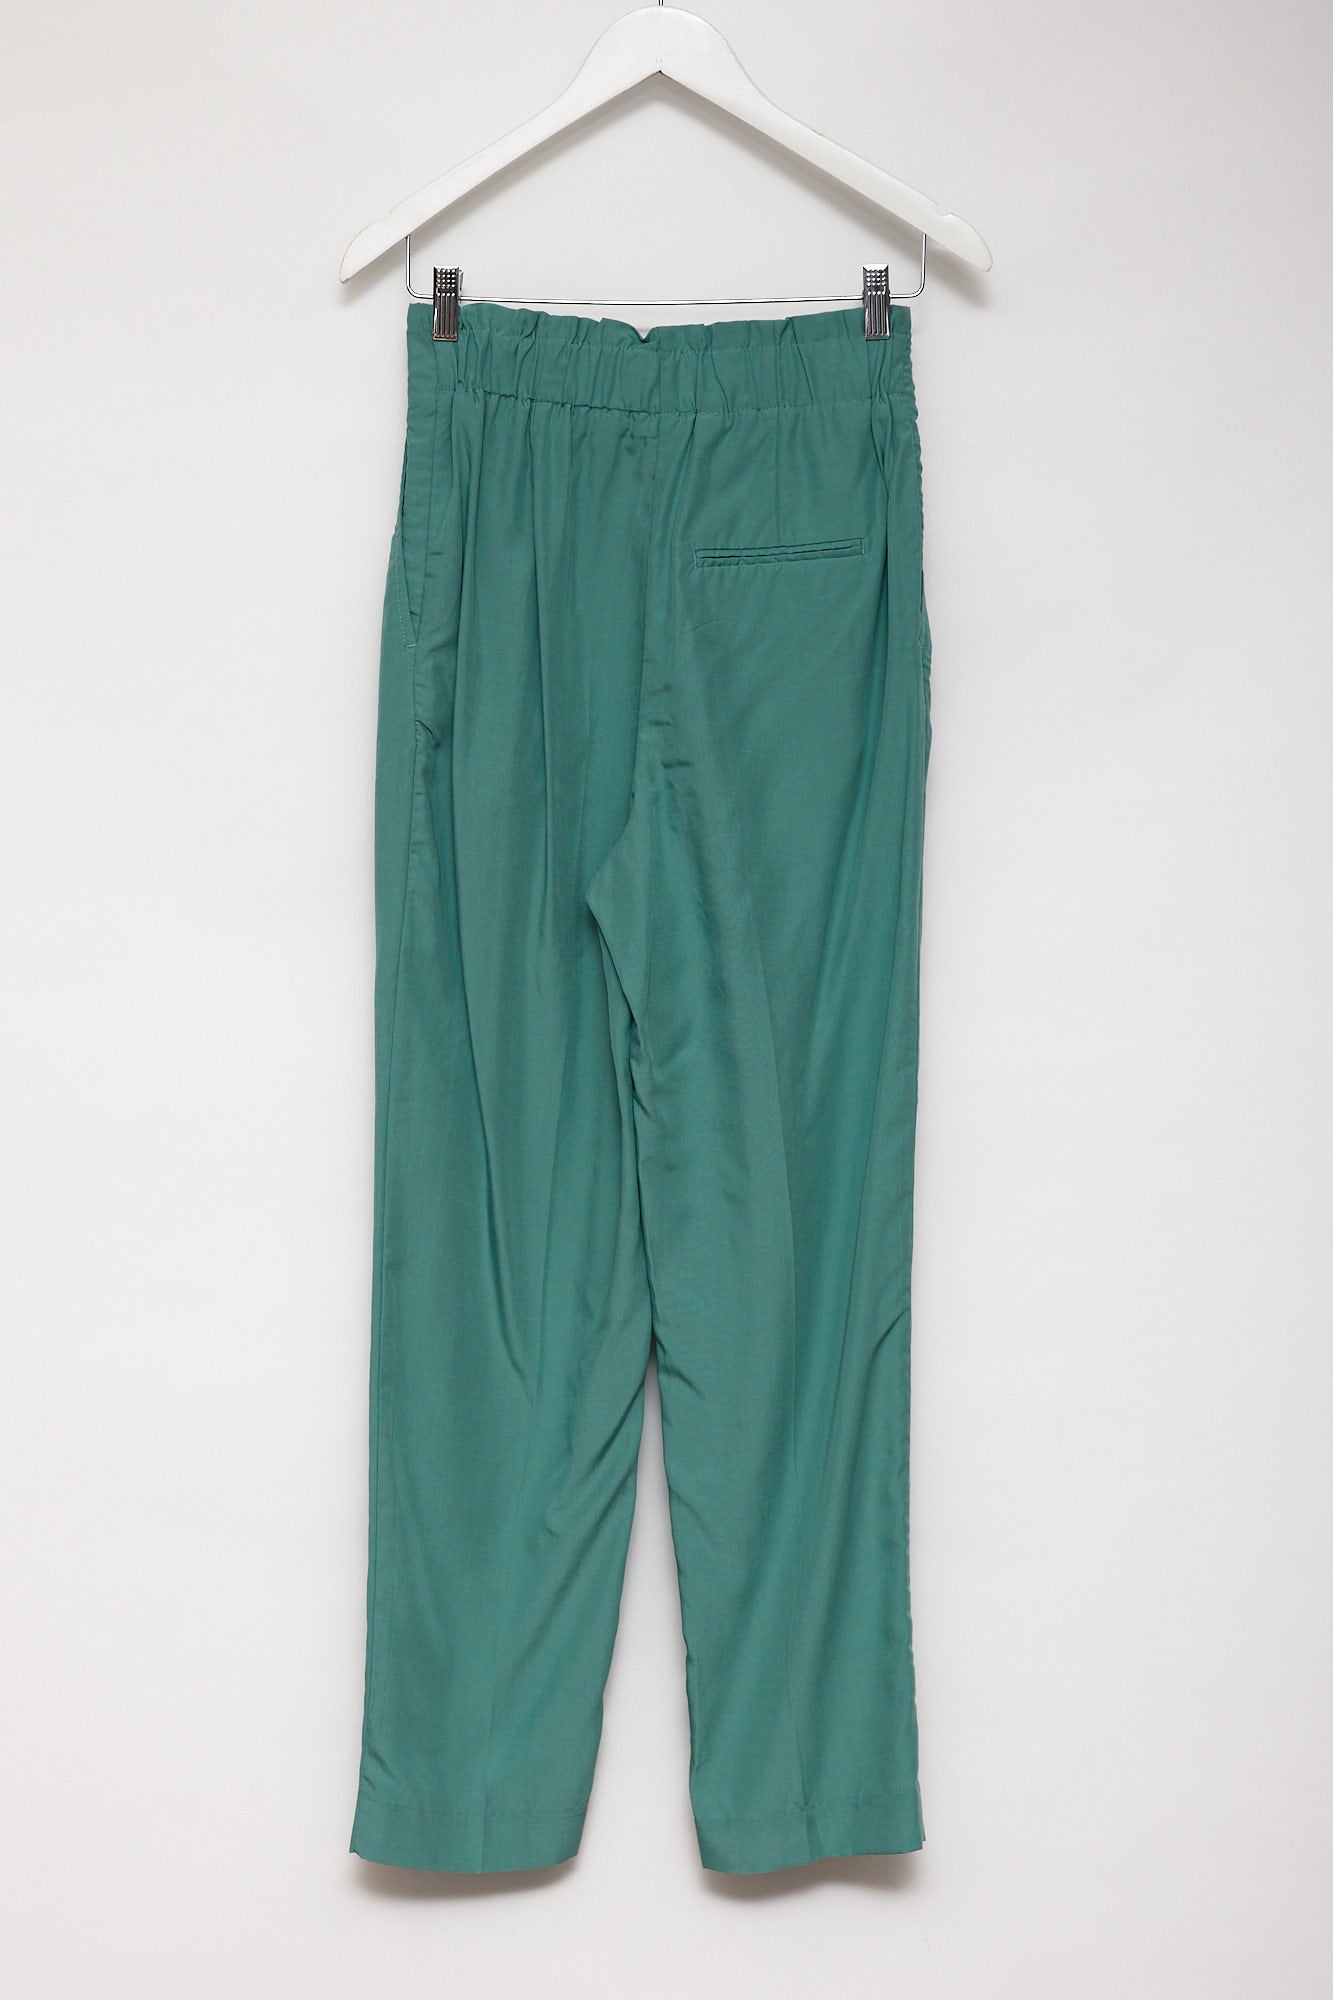 Womens Mango high waisted green trouser size small